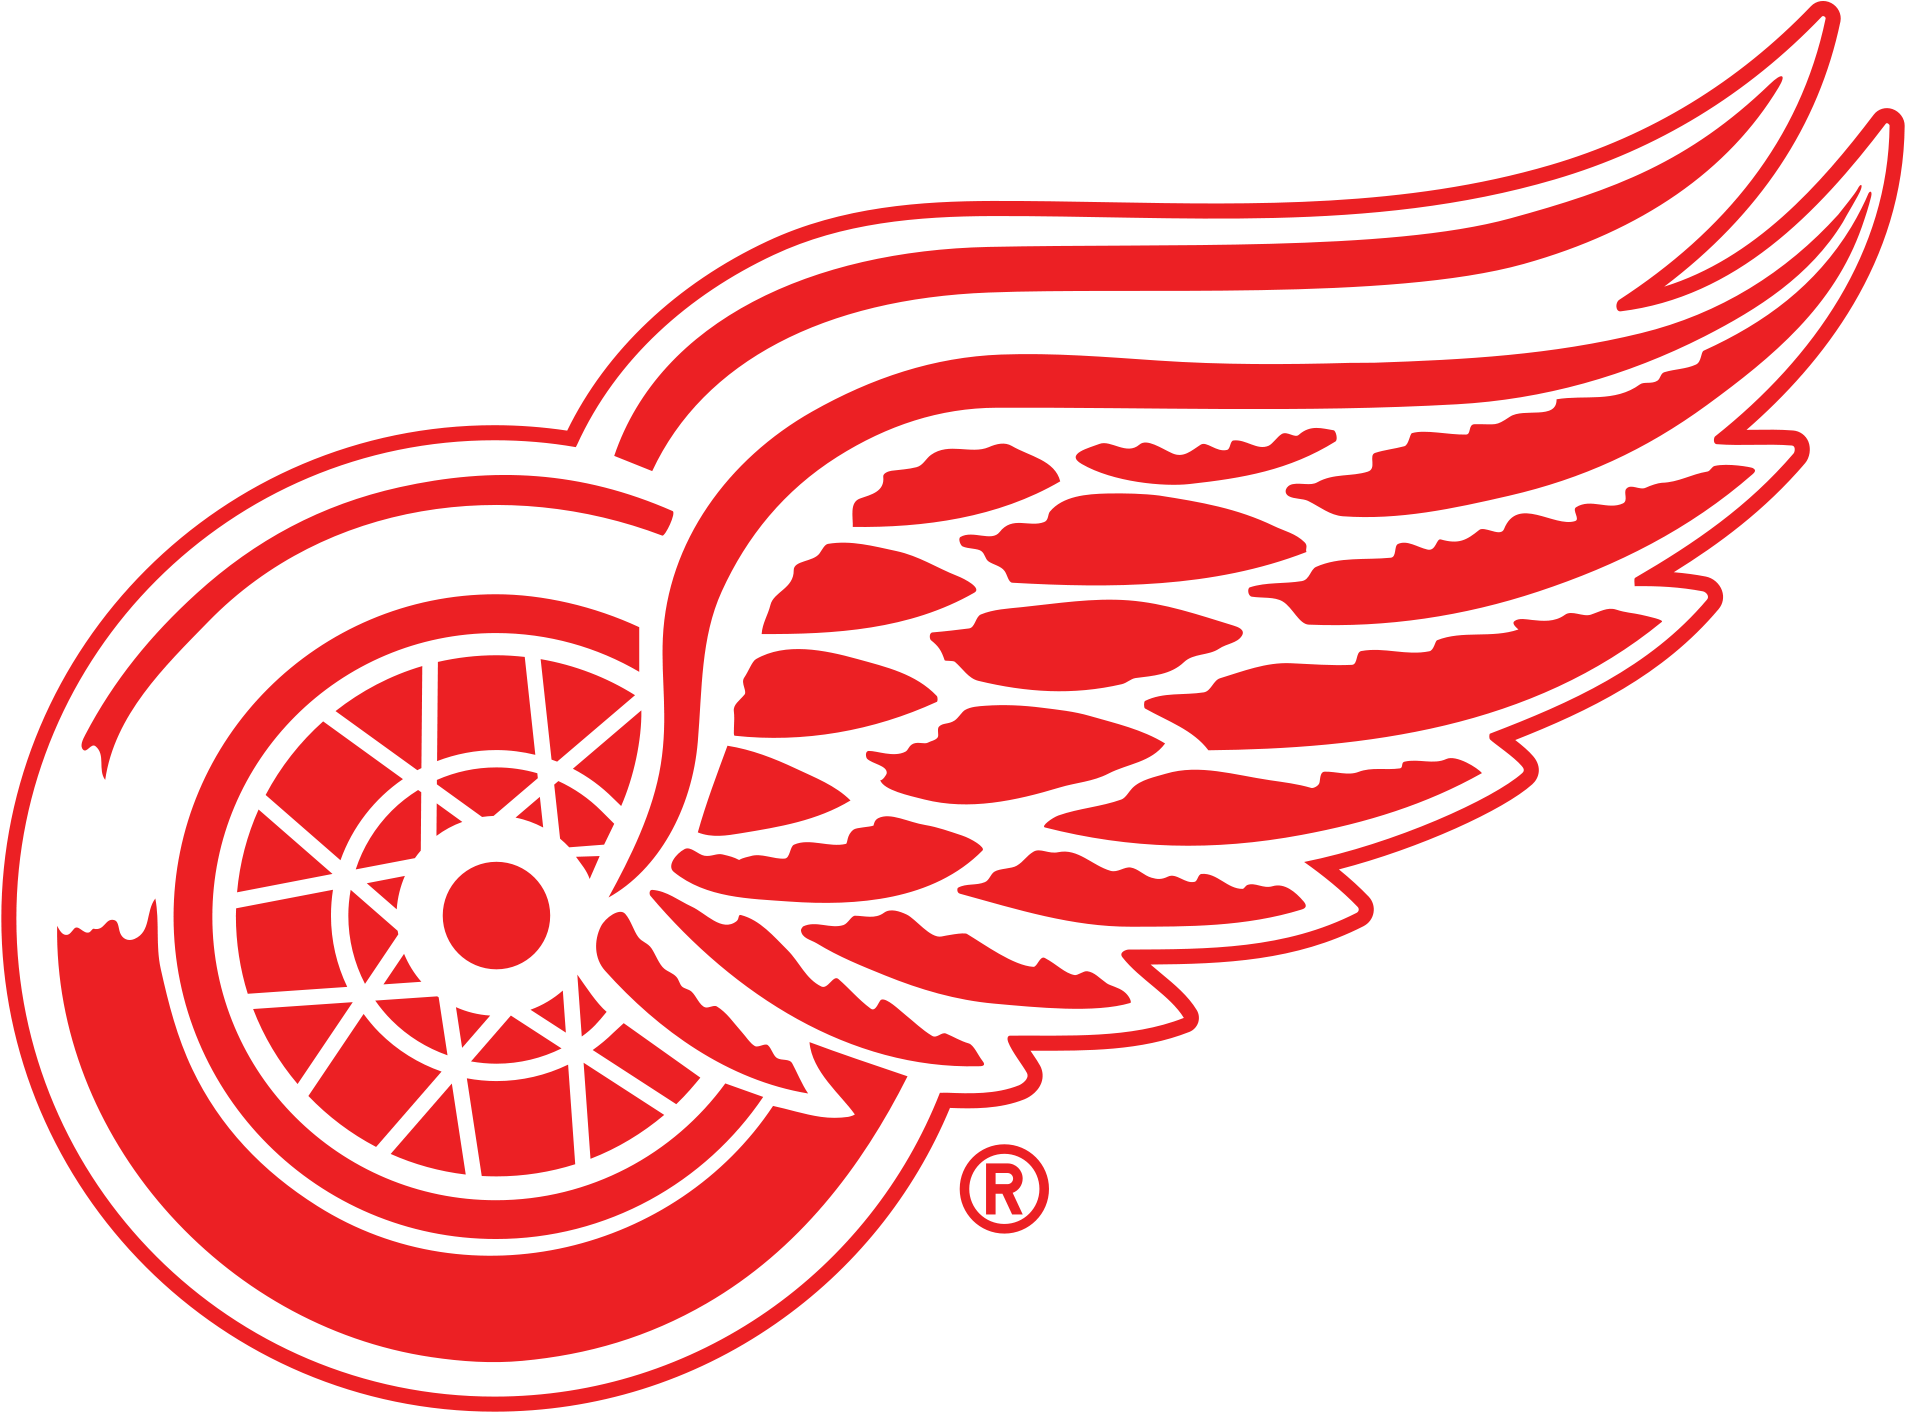 Mackinnon's Ot Goal Caps Avs' Rally Over Red Wings - Detroit Redwings (1500x1500)